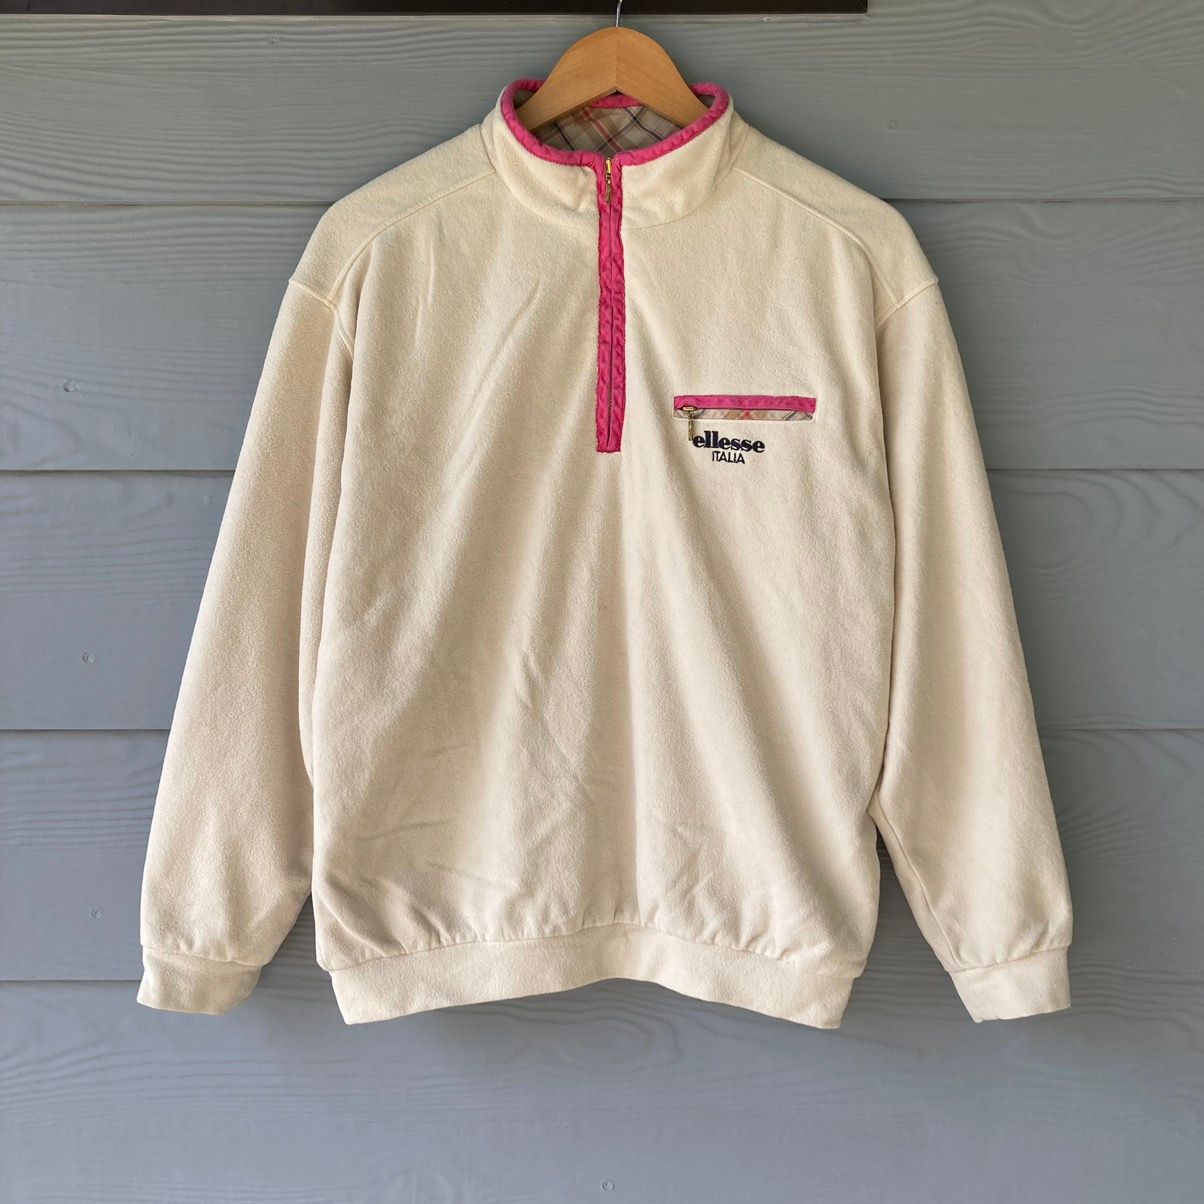 Vintage - 90s Ellese Quater Zipper Sweatshirt - 1